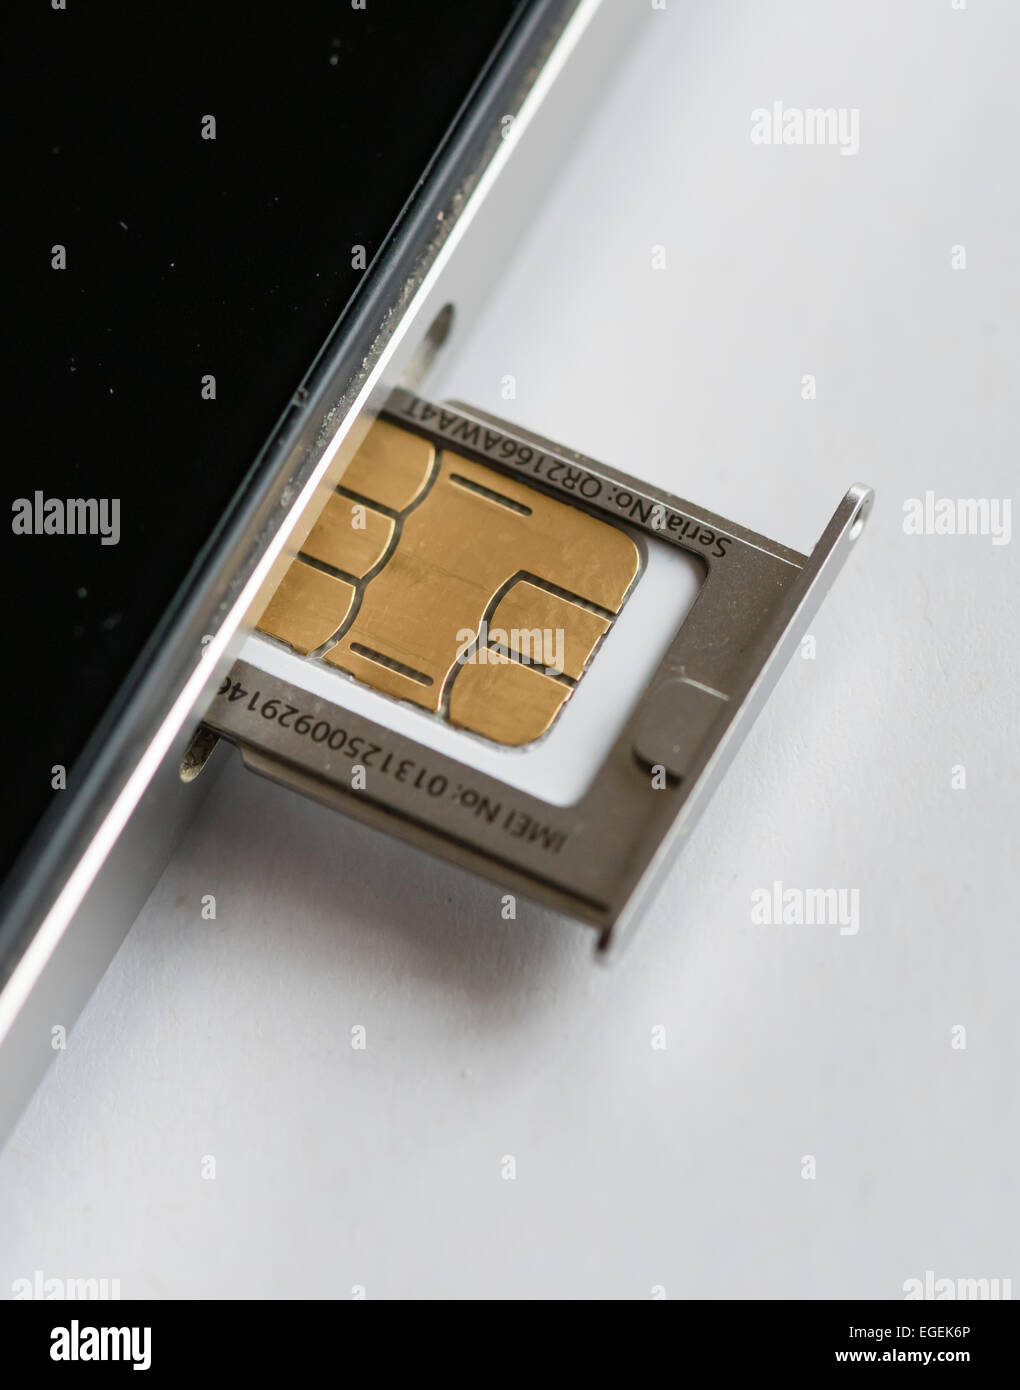 Una micro-SIM card è inserita in un Apple iphone 4 smartphone. Foto Stock